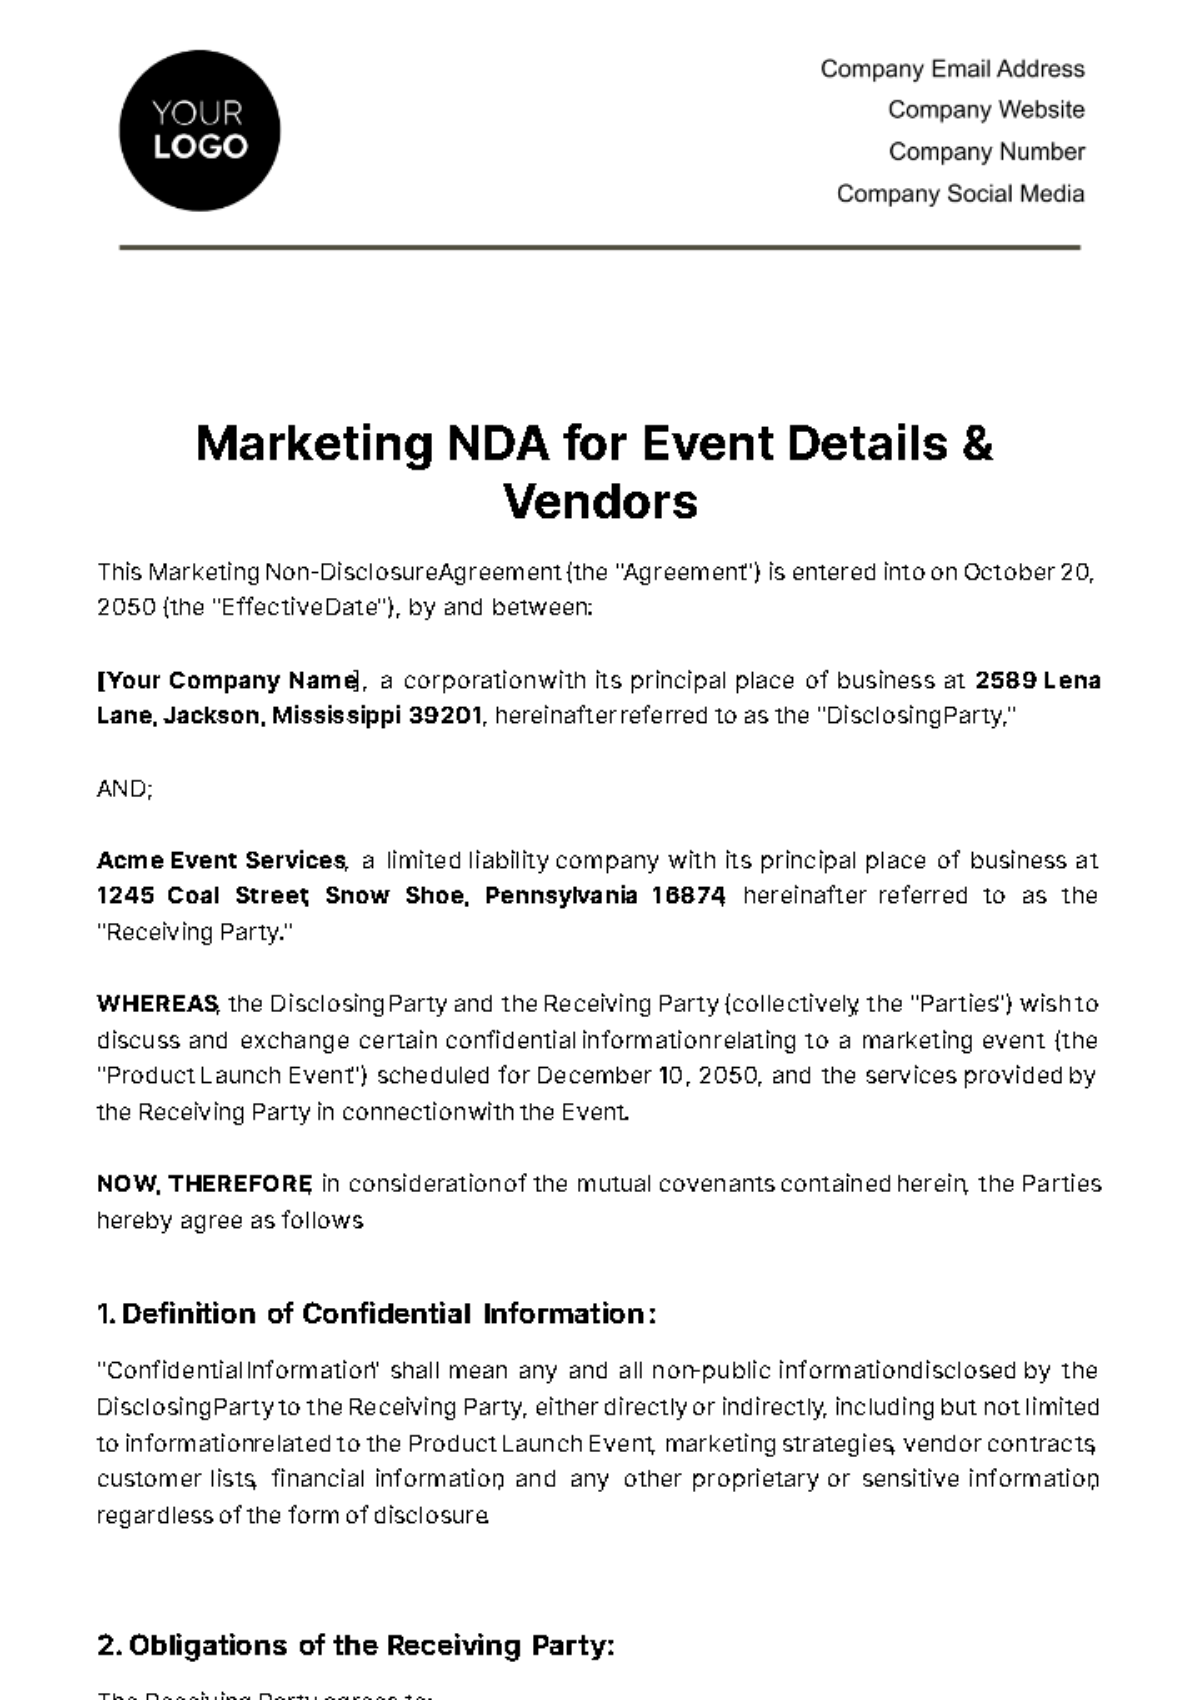 Free Marketing NDA for Event Details & Vendors Template